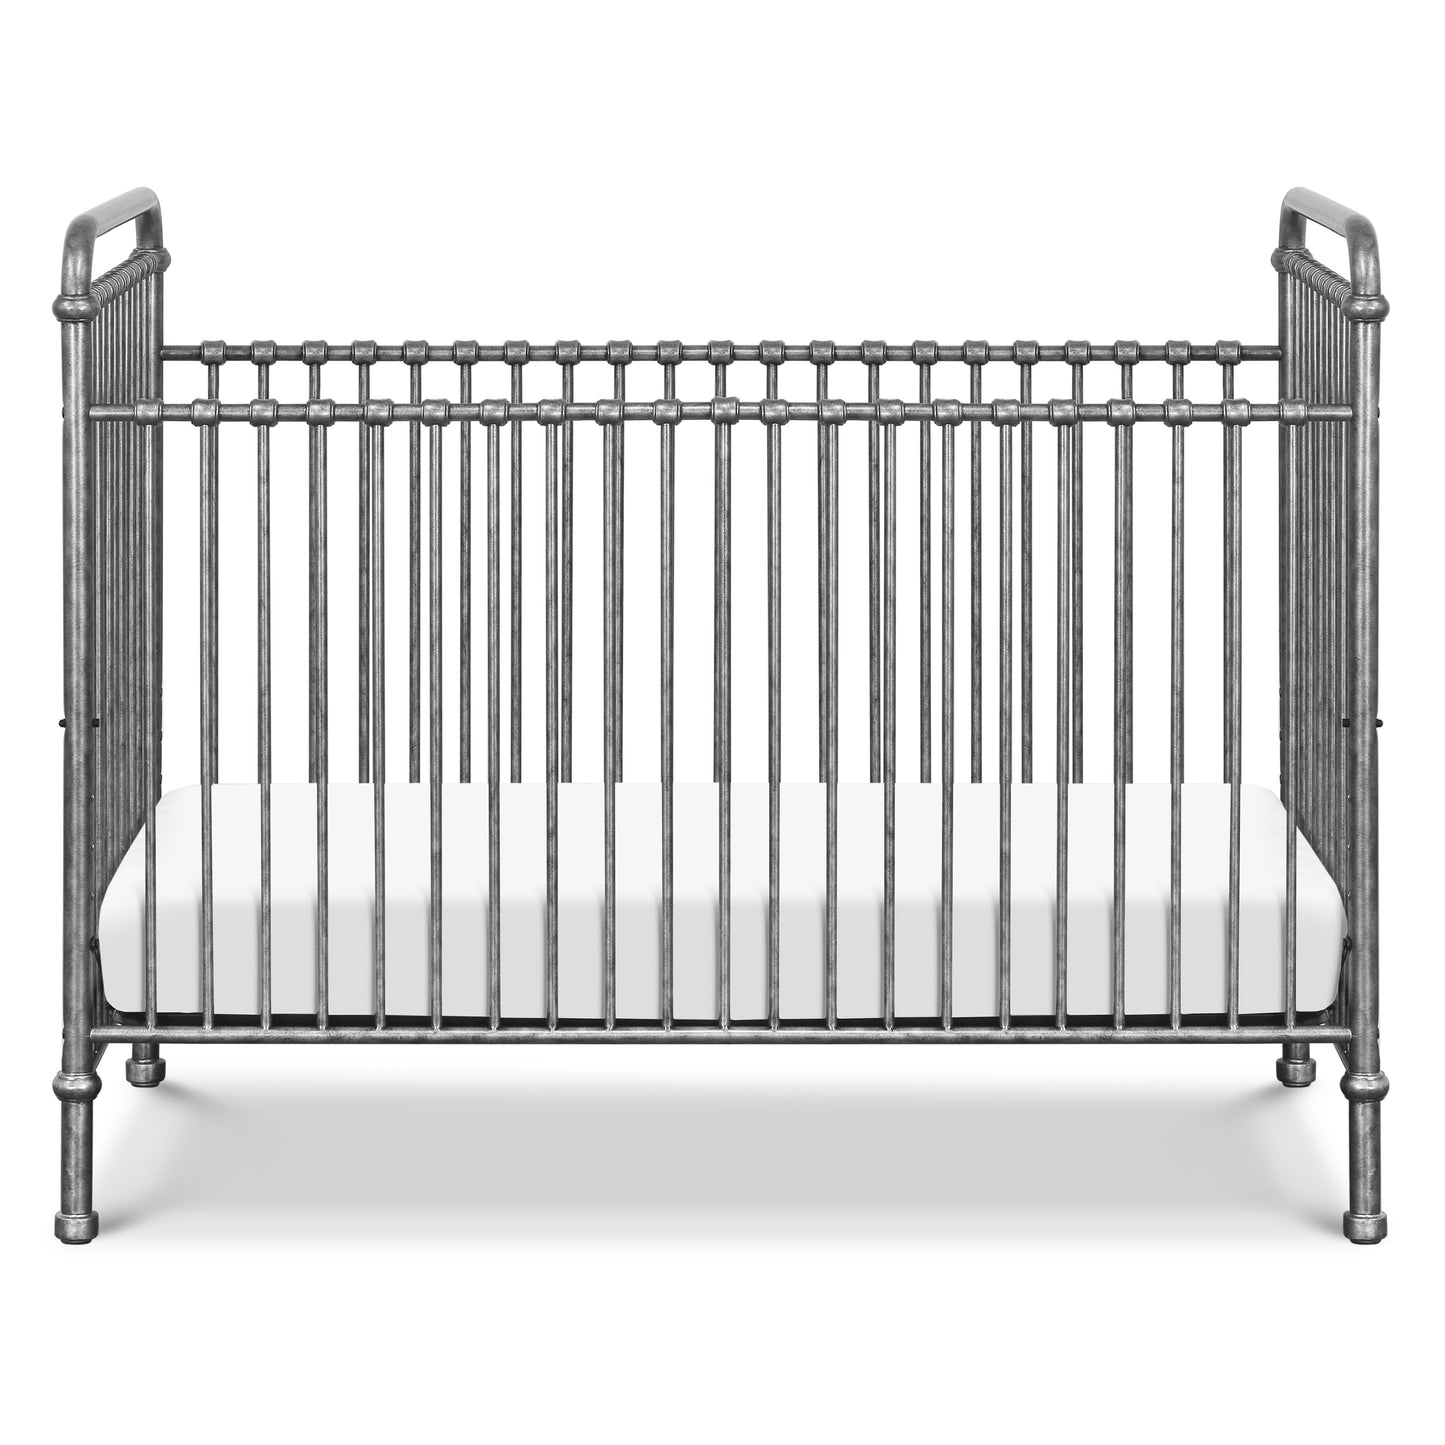 M15501VS,Abigail 3-in-1 Convertible Crib in Vintage Silver